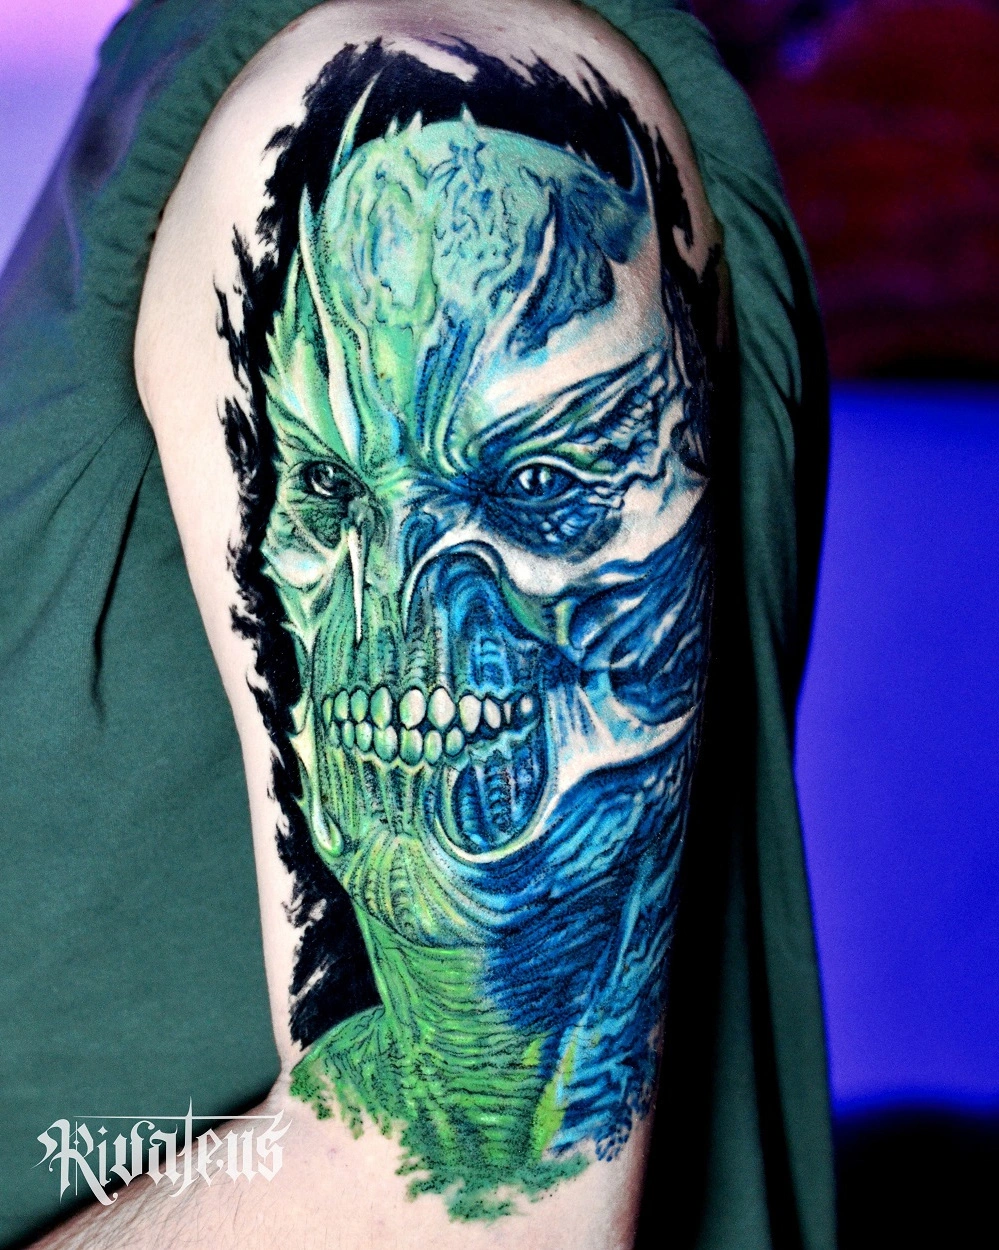 lizard man horror portrait tattoo by tugce soylu